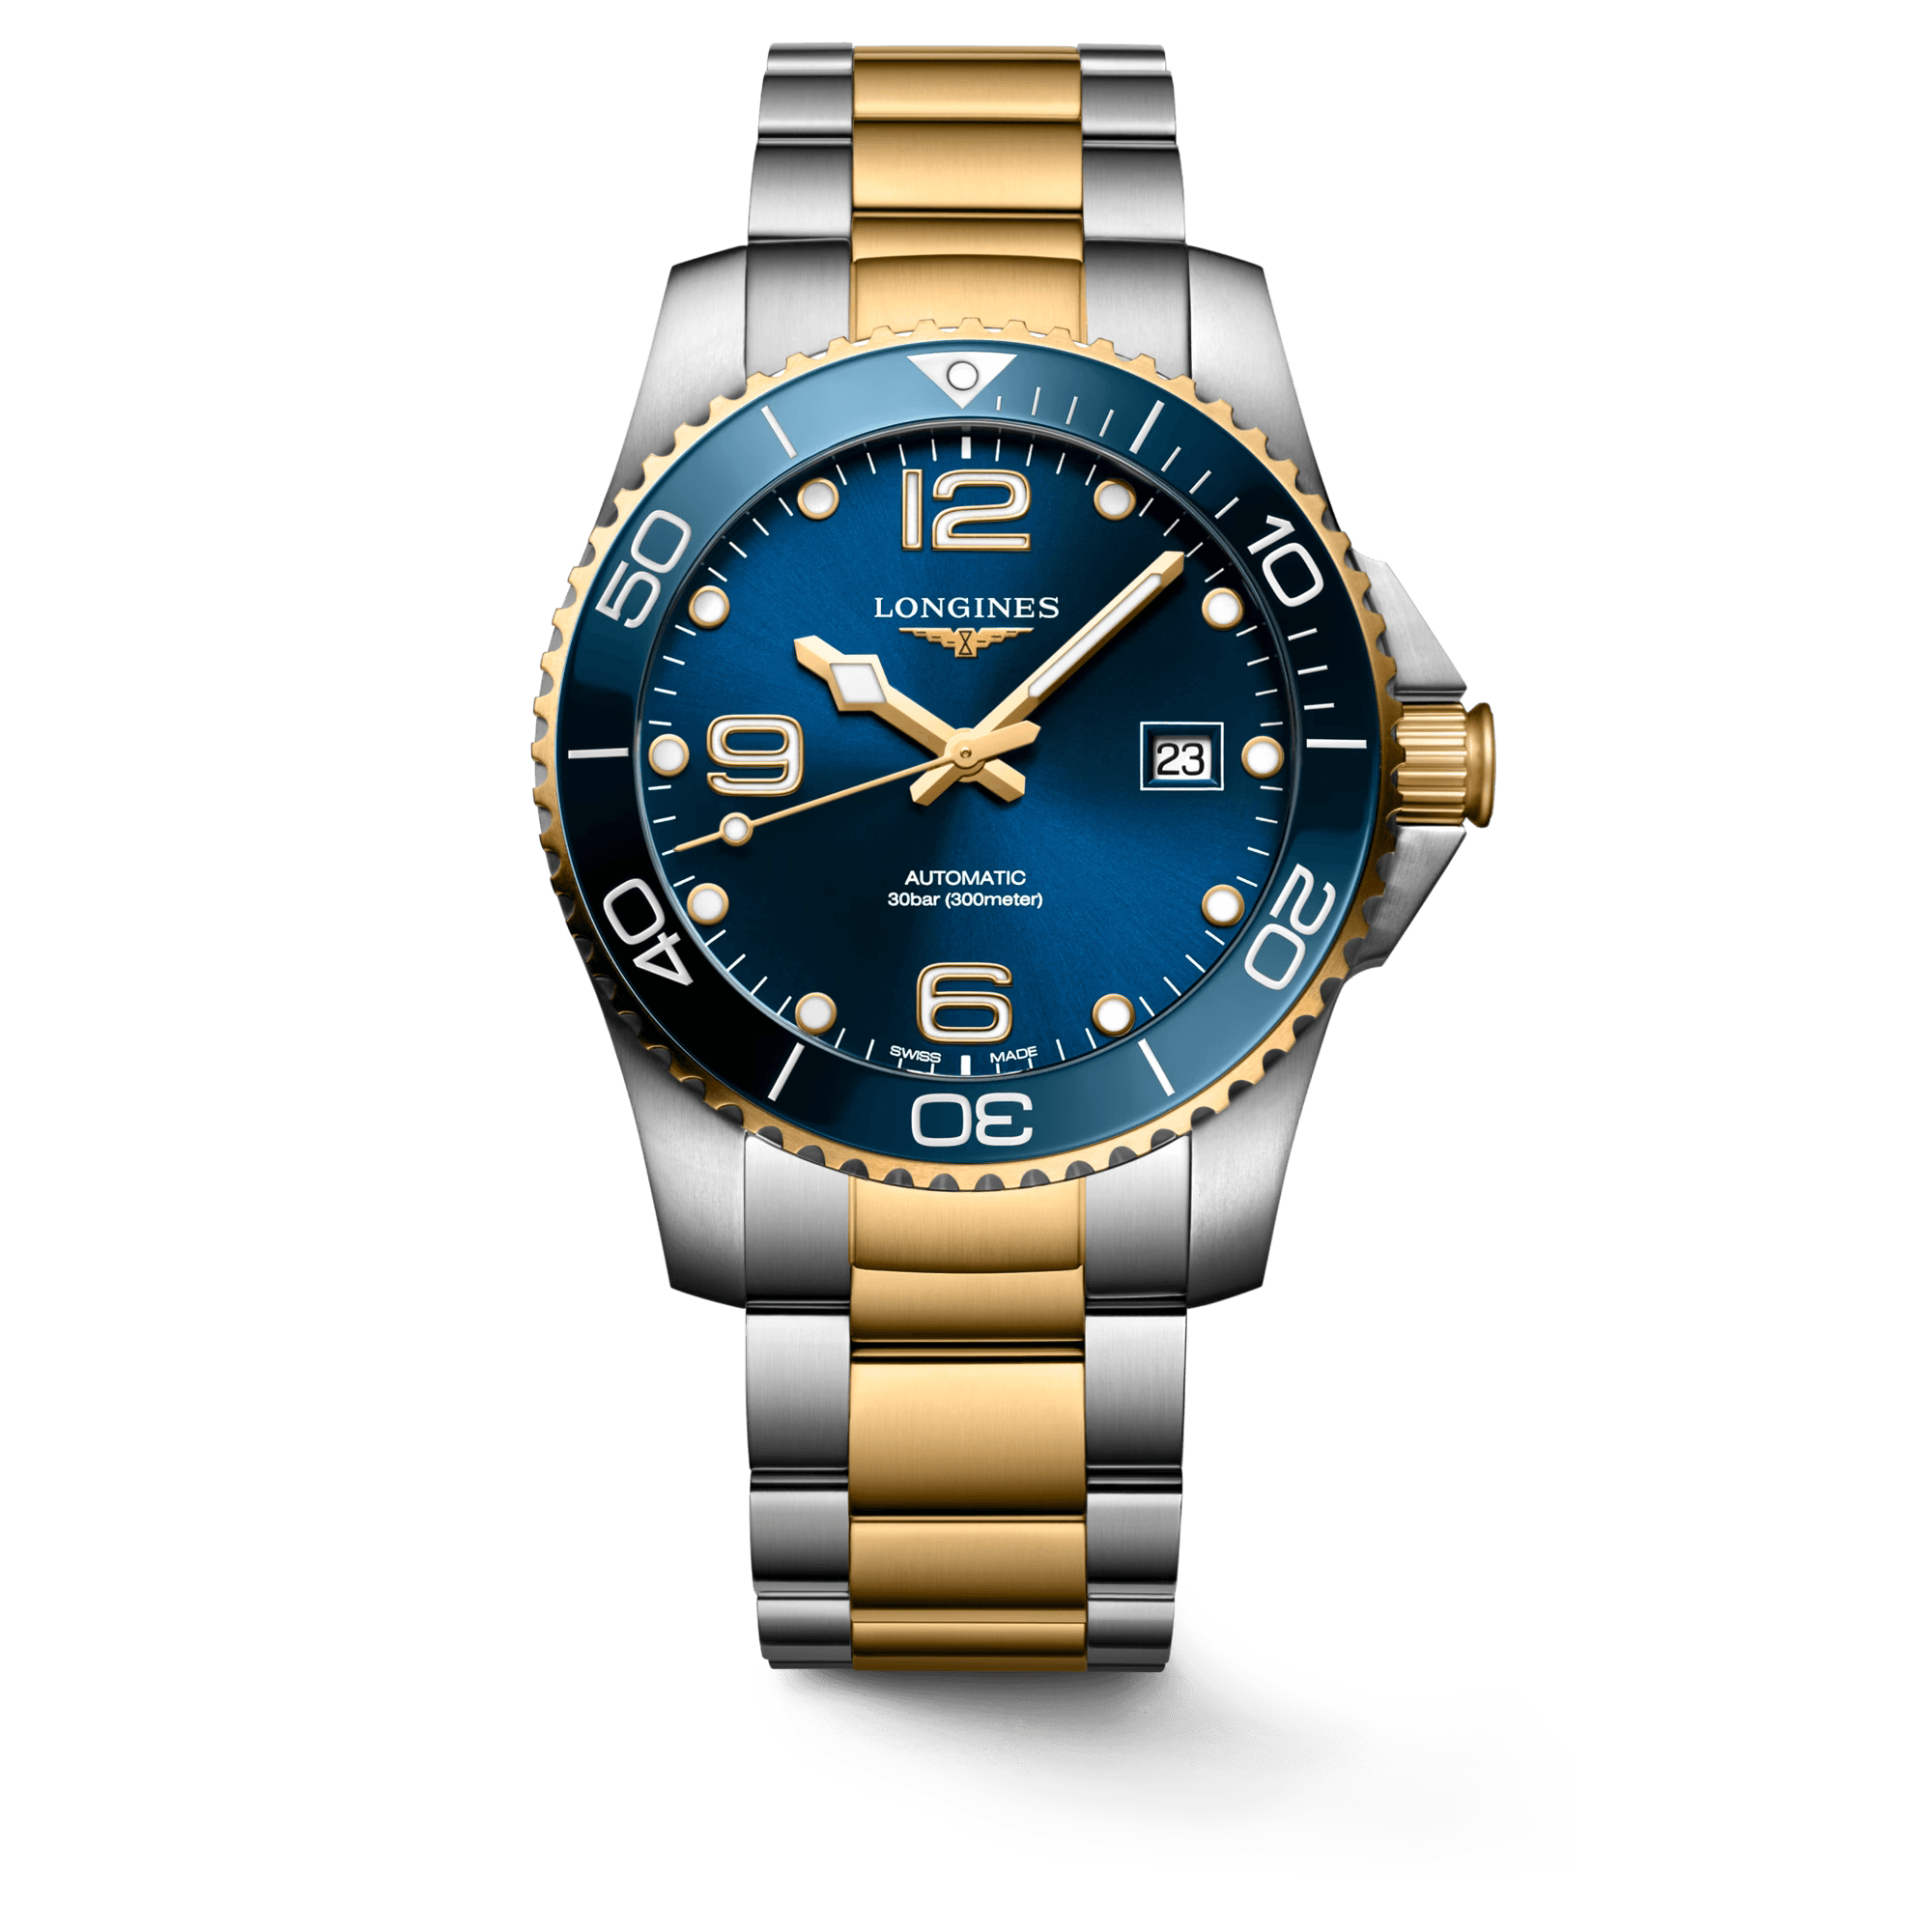 Longines Hydroconquest Automatic Men's Watch L37813967